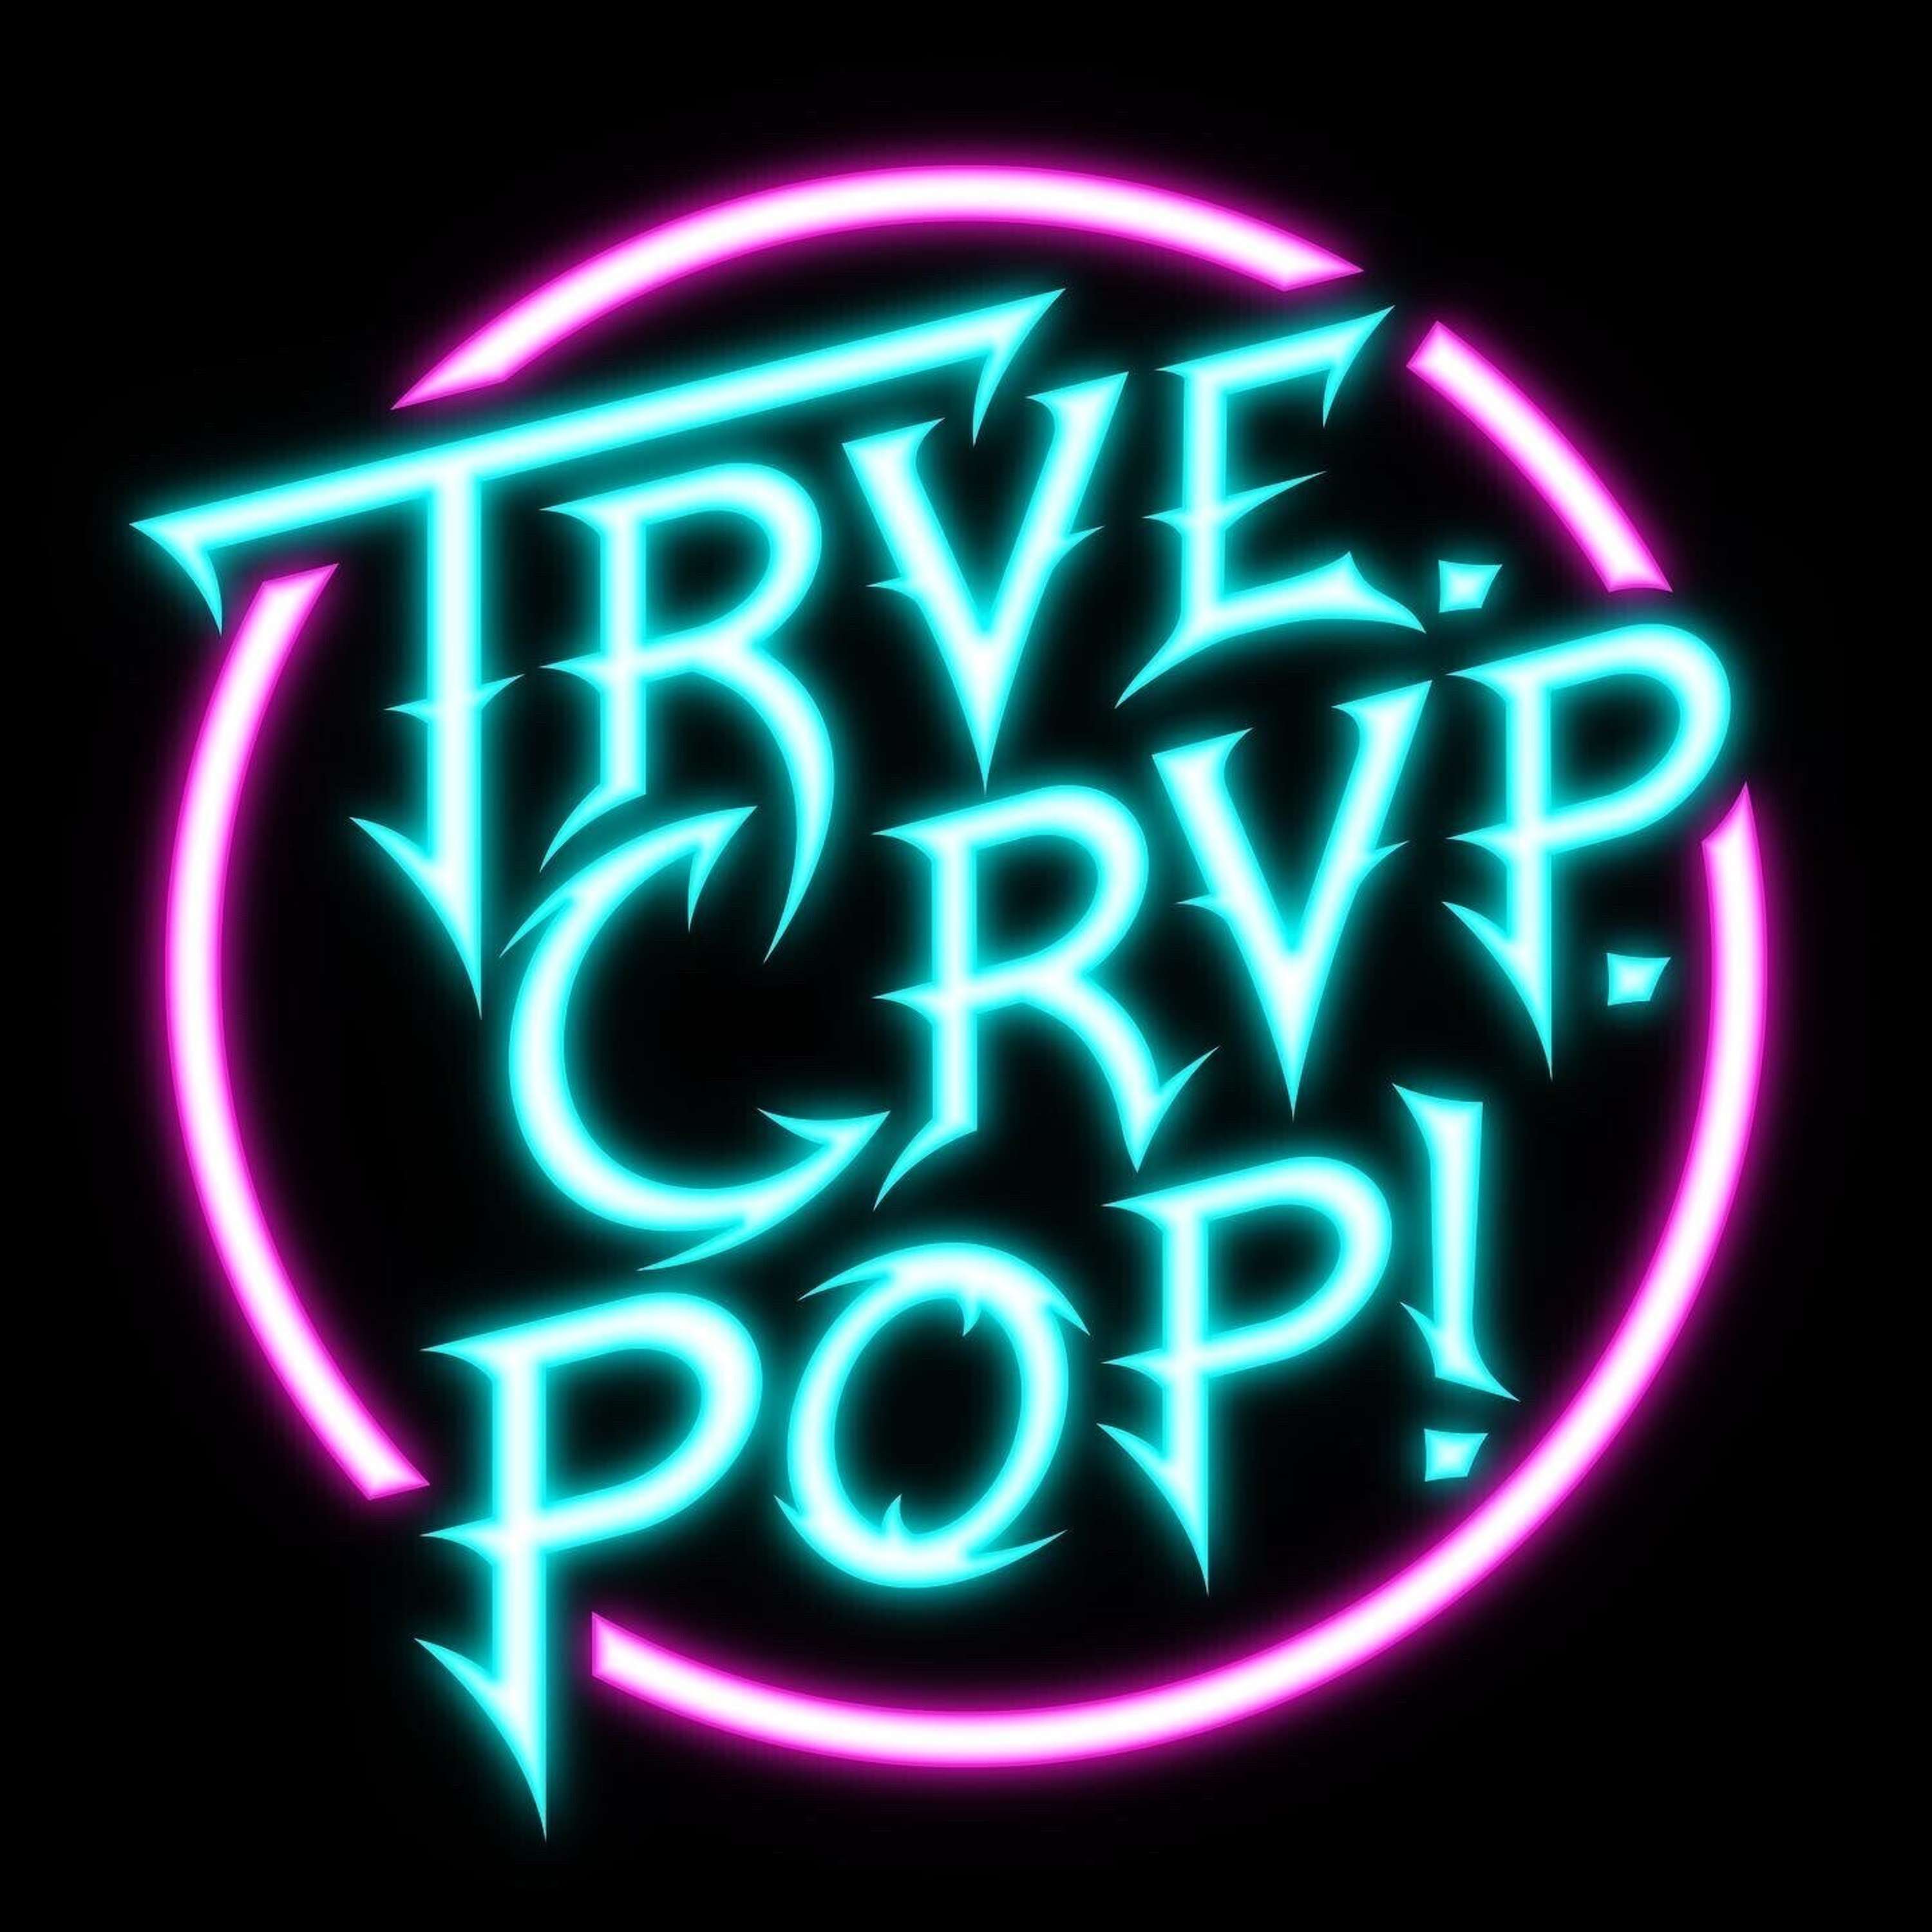 Trve. Crvp. Pop! Ep.10: Trve. Clvff. Pop! Cliff Richard - Cliff With Strings - My Kinda Life